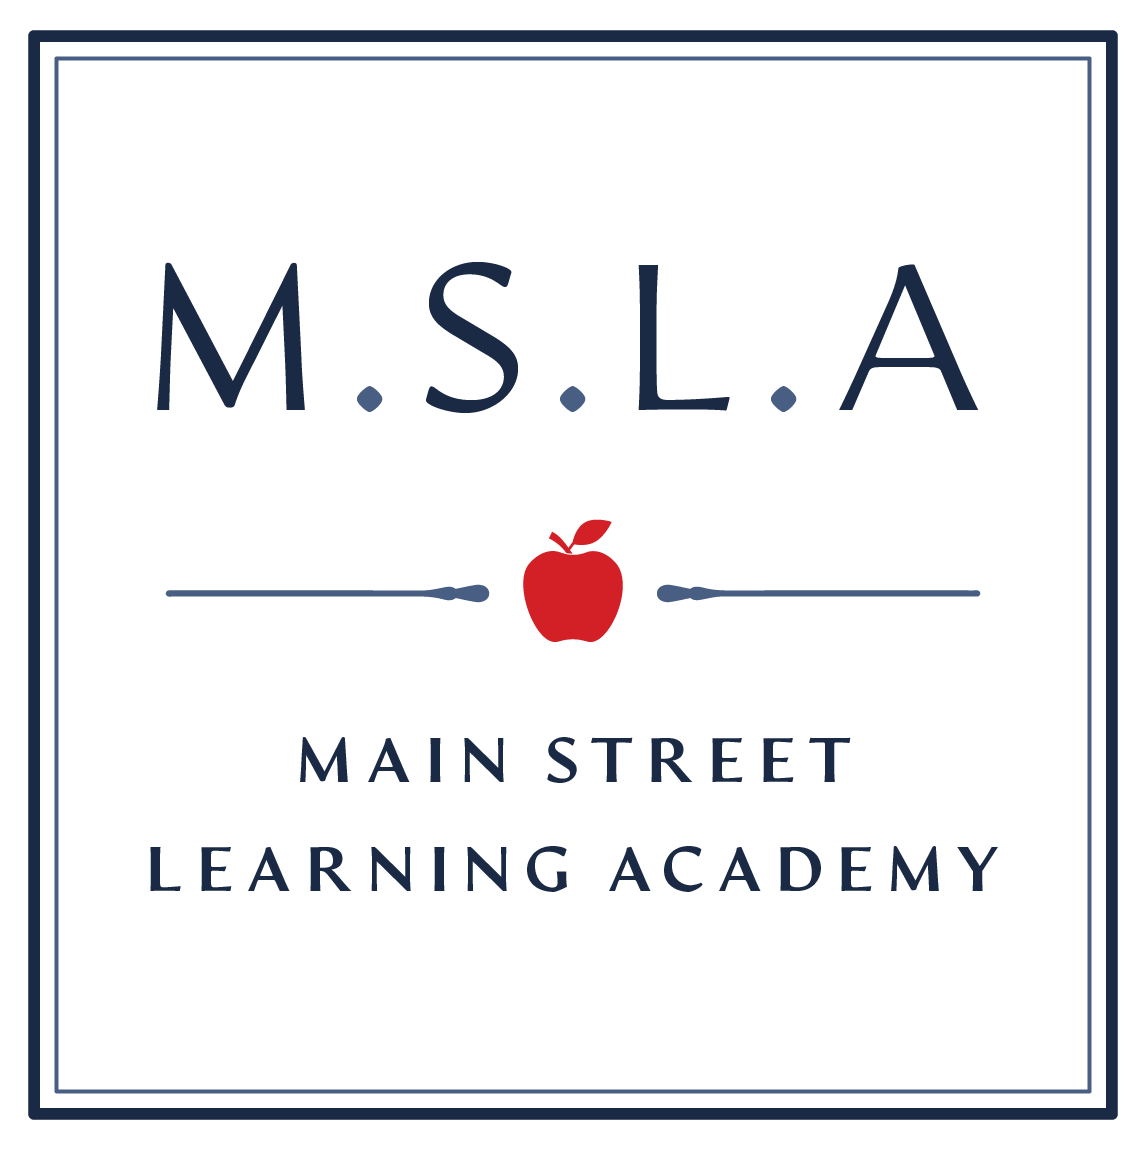 Main Street Learning Academy